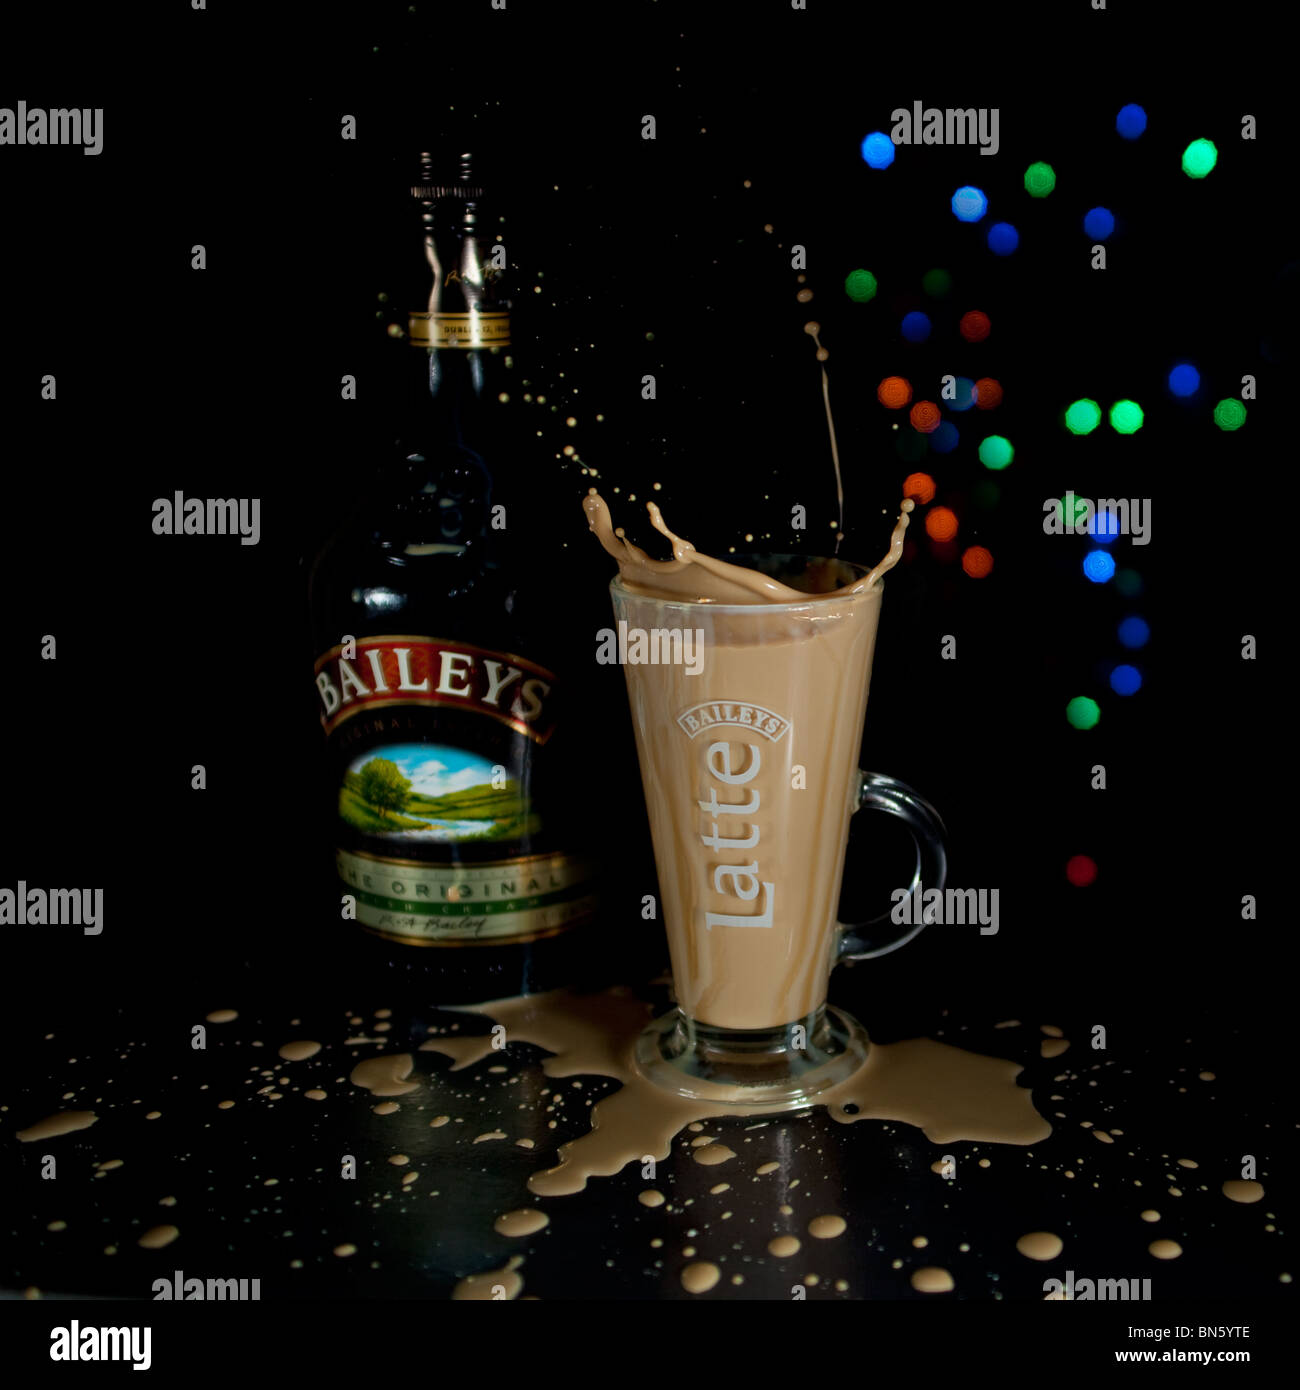 Baileys Coffee splash Stock Photo